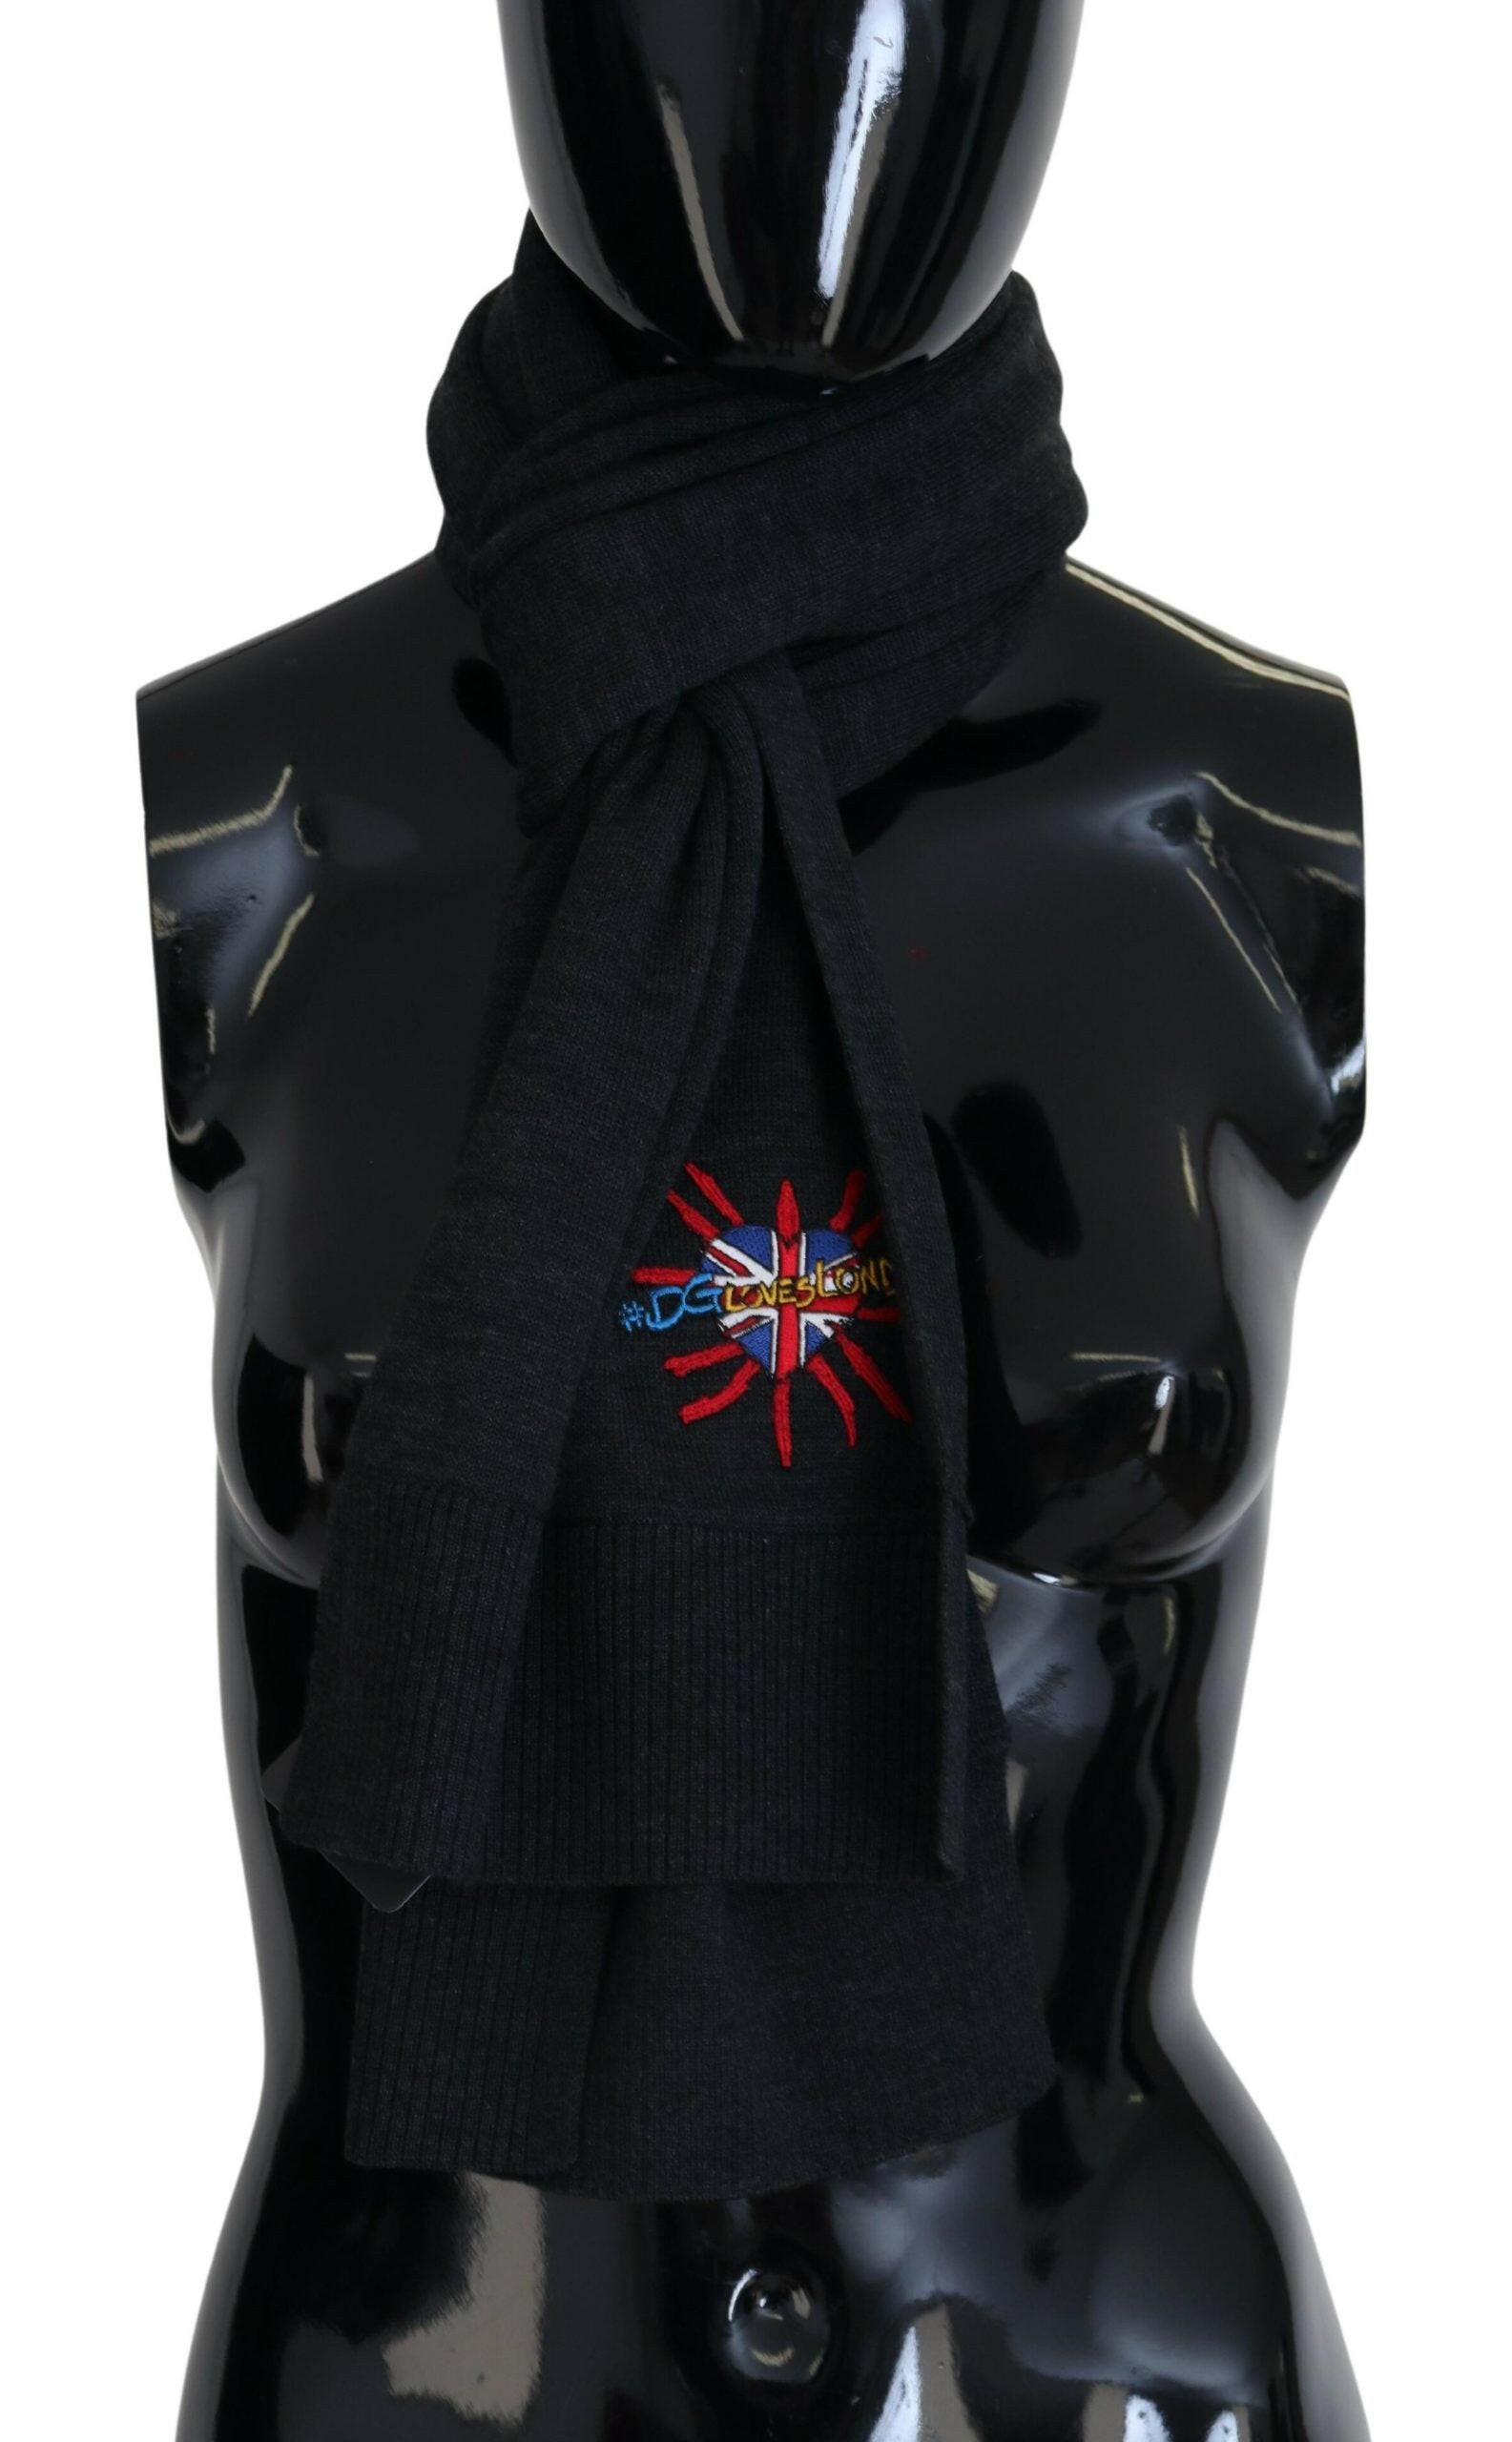 Dolce & Gabbana Black Sacred Heart #DGLovesLondon Wrap Scarf - GENUINE AUTHENTIC BRAND LLC  